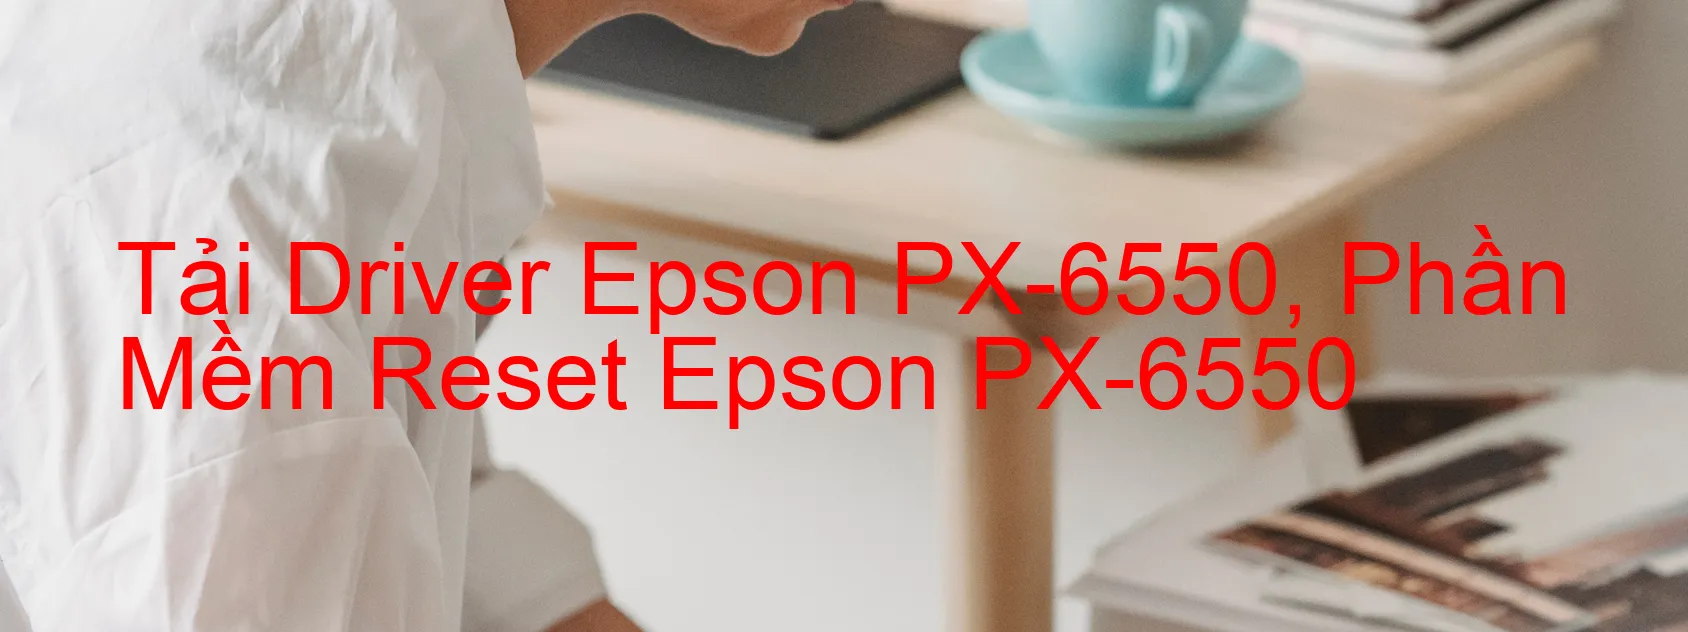 Driver Epson PX-6550, Phần Mềm Reset Epson PX-6550